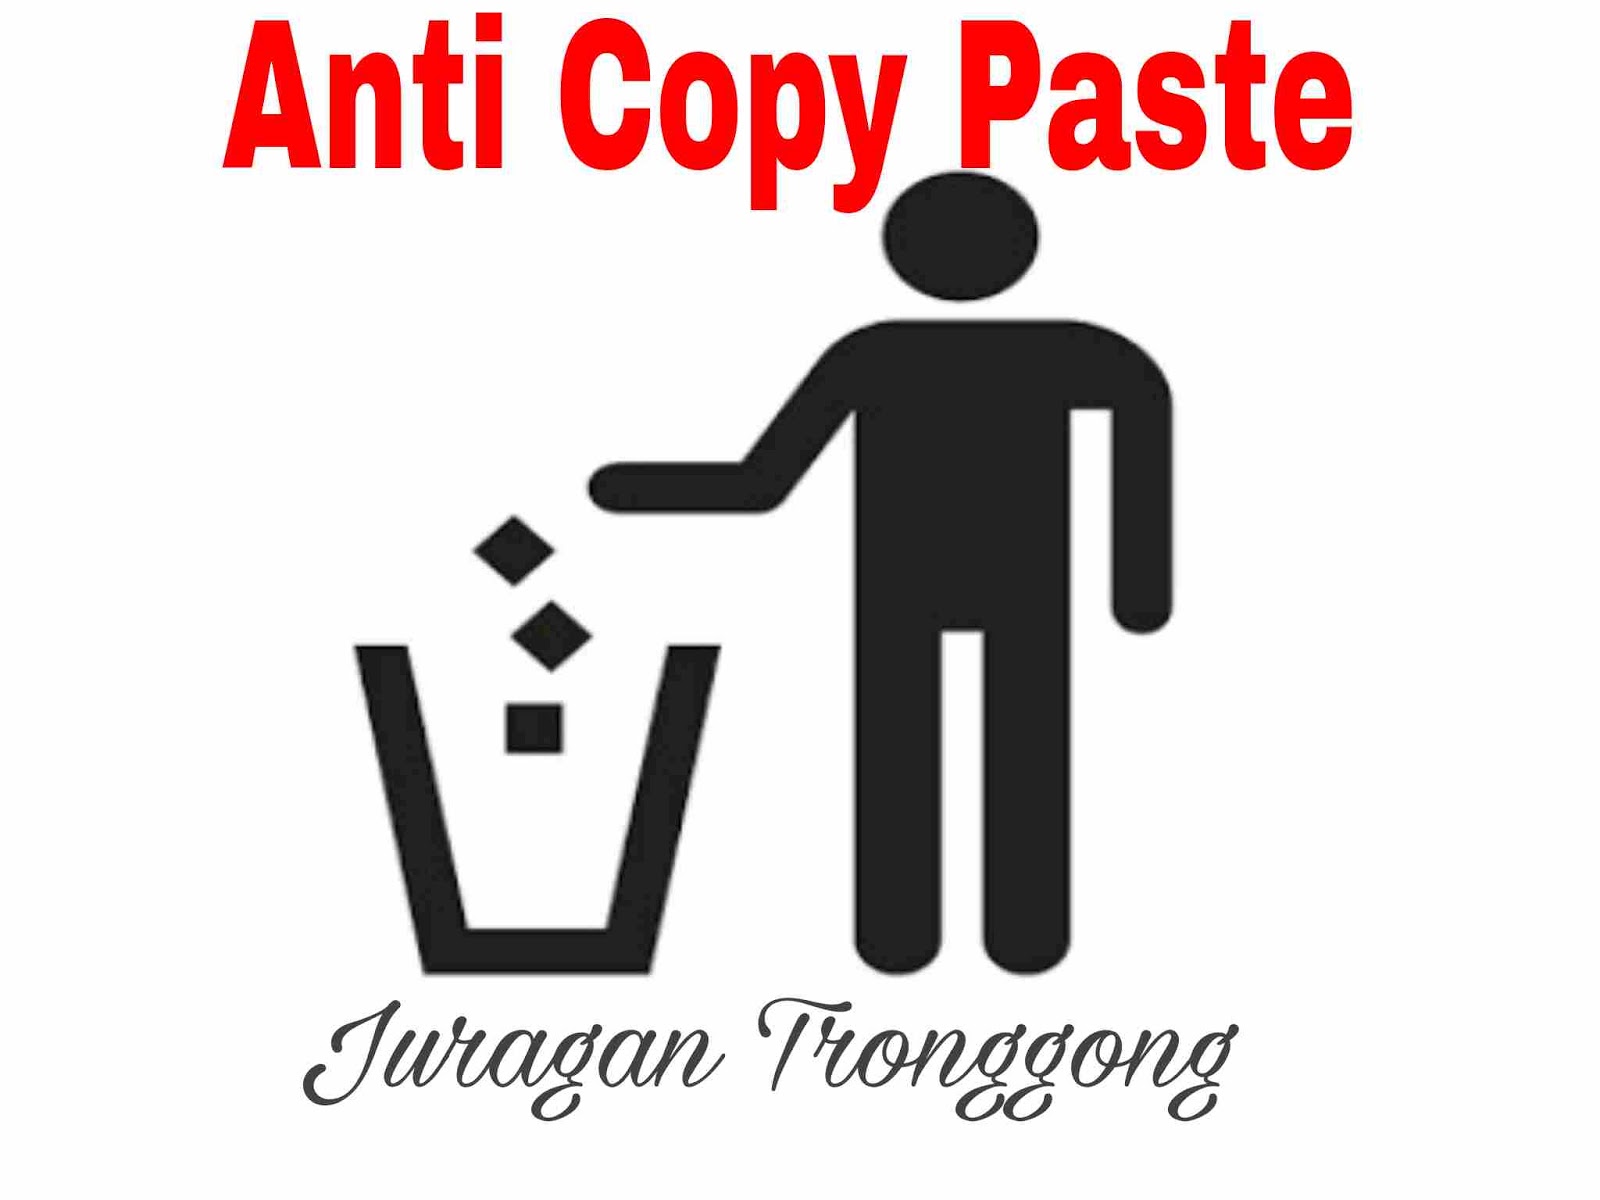 Copy and paste porn